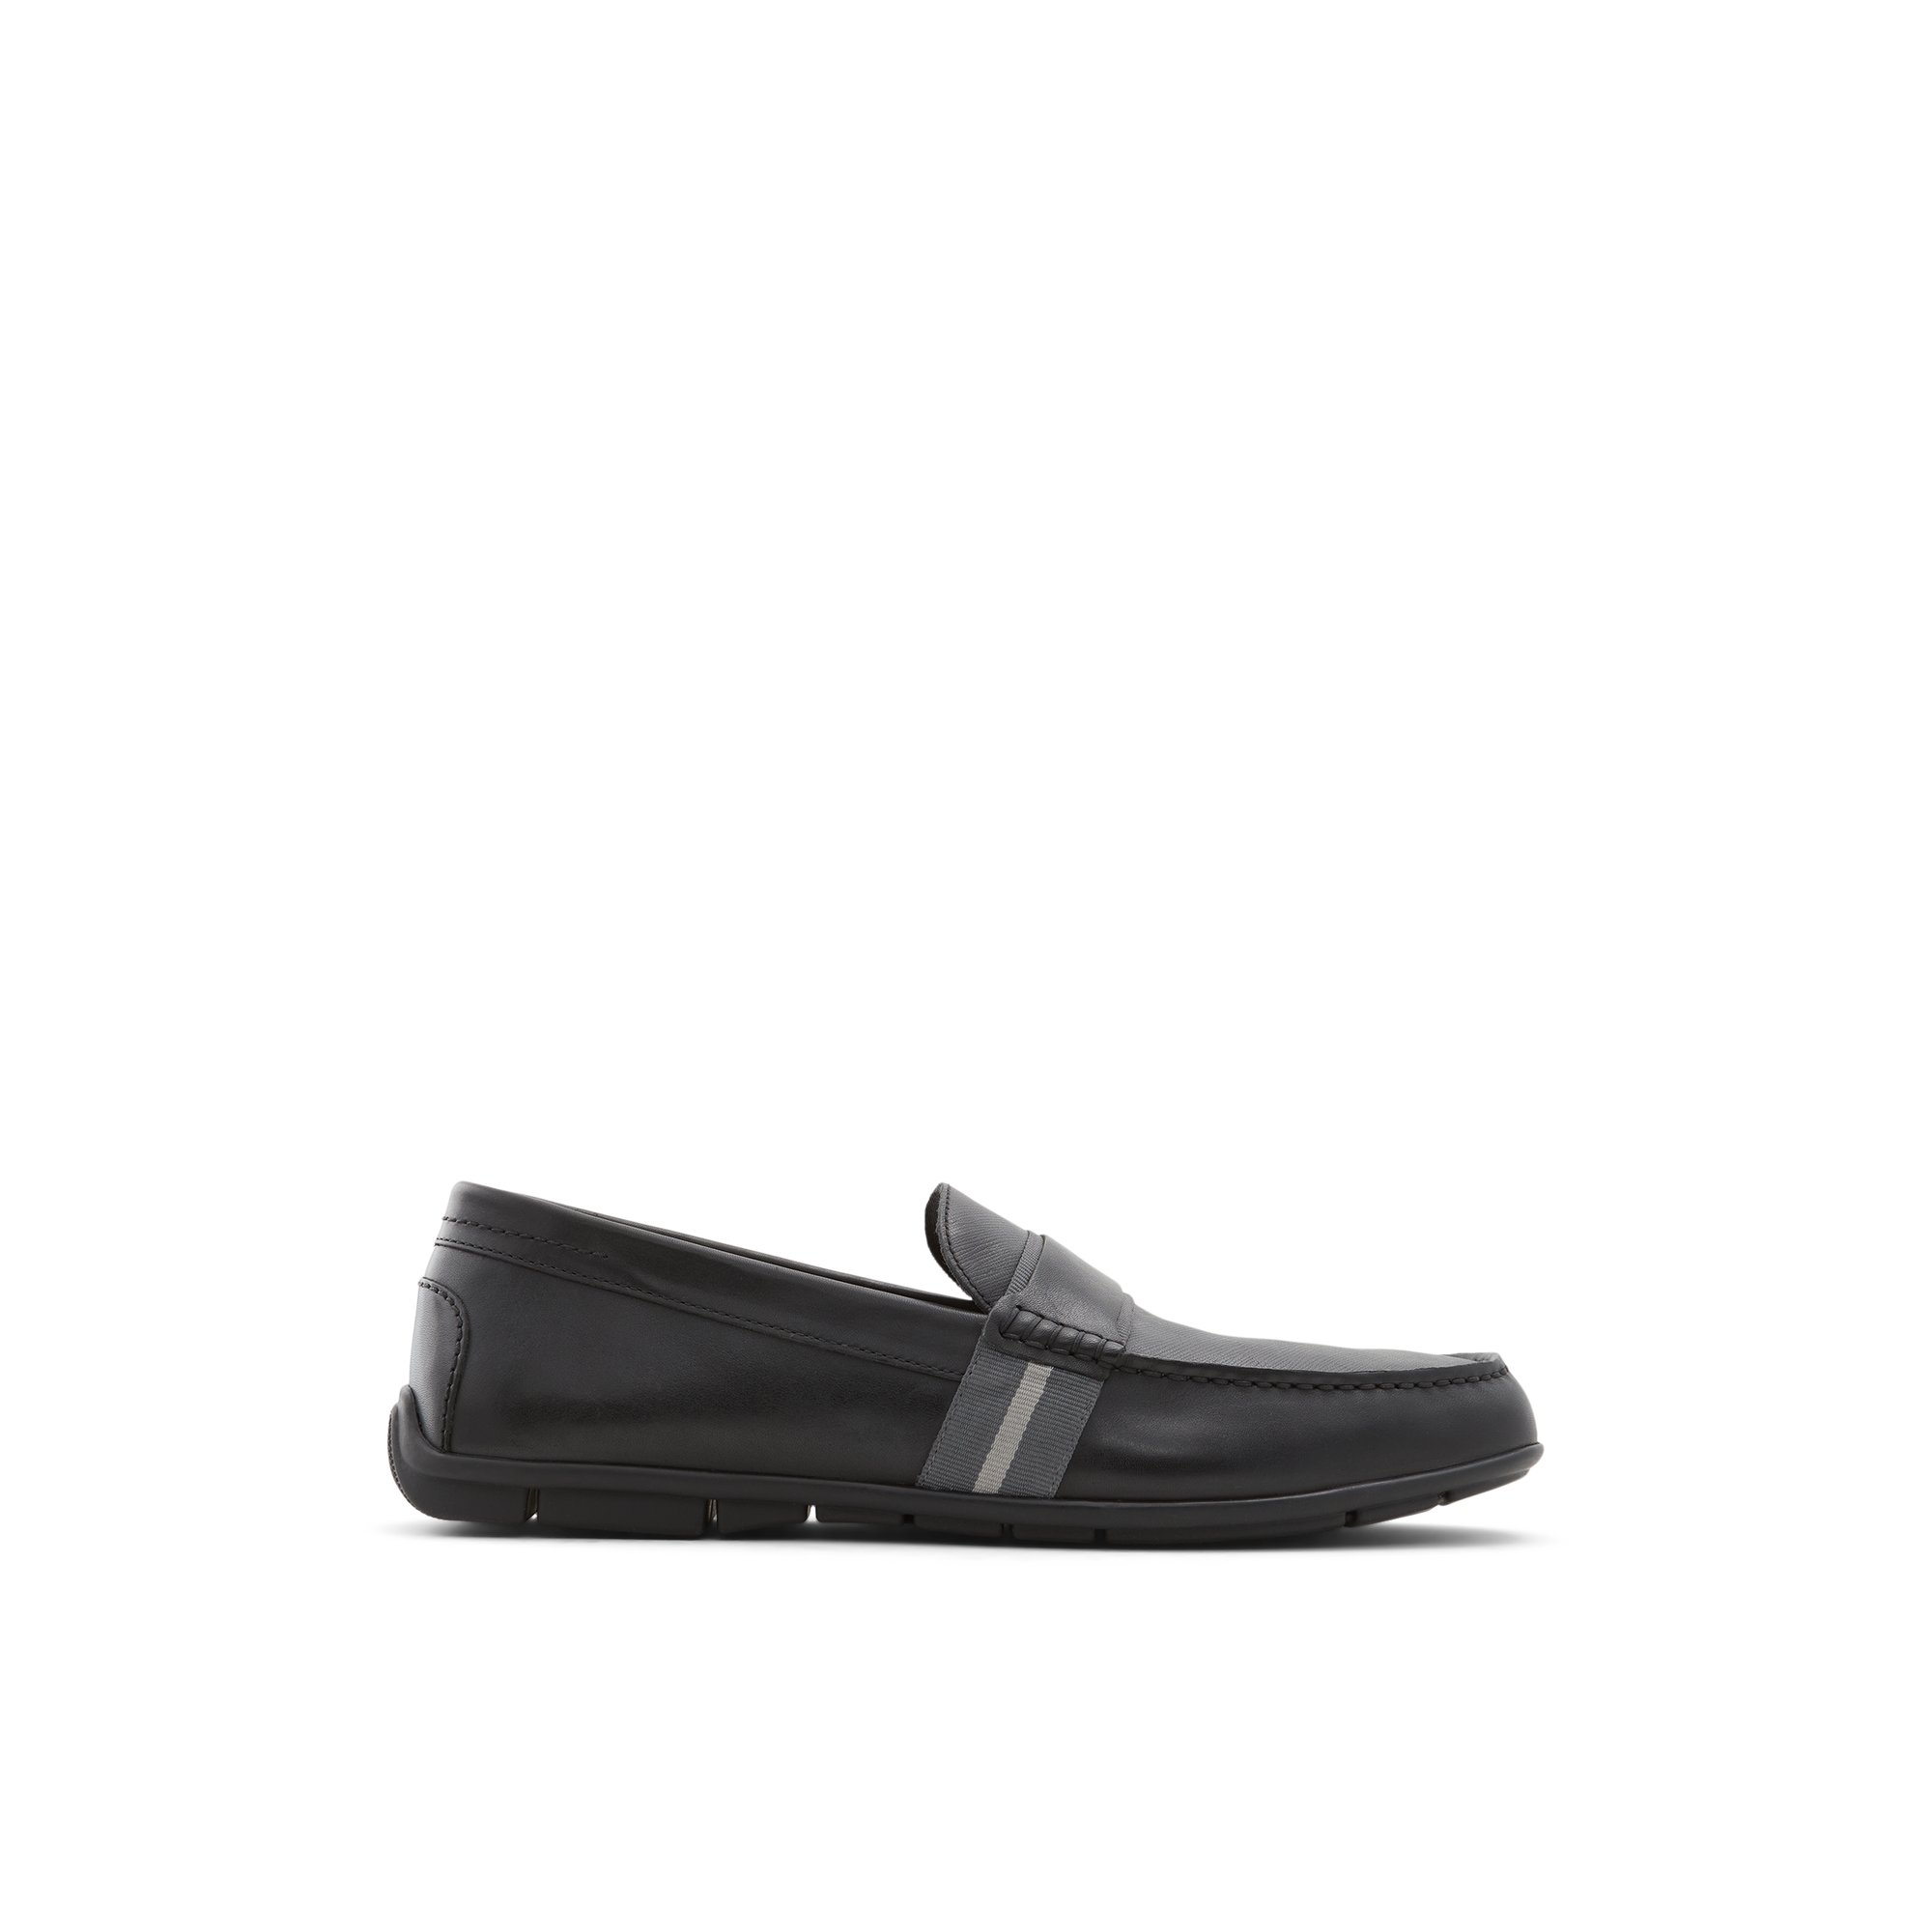 ALDO Damianflex - Men's Loafers and Slip on - Black